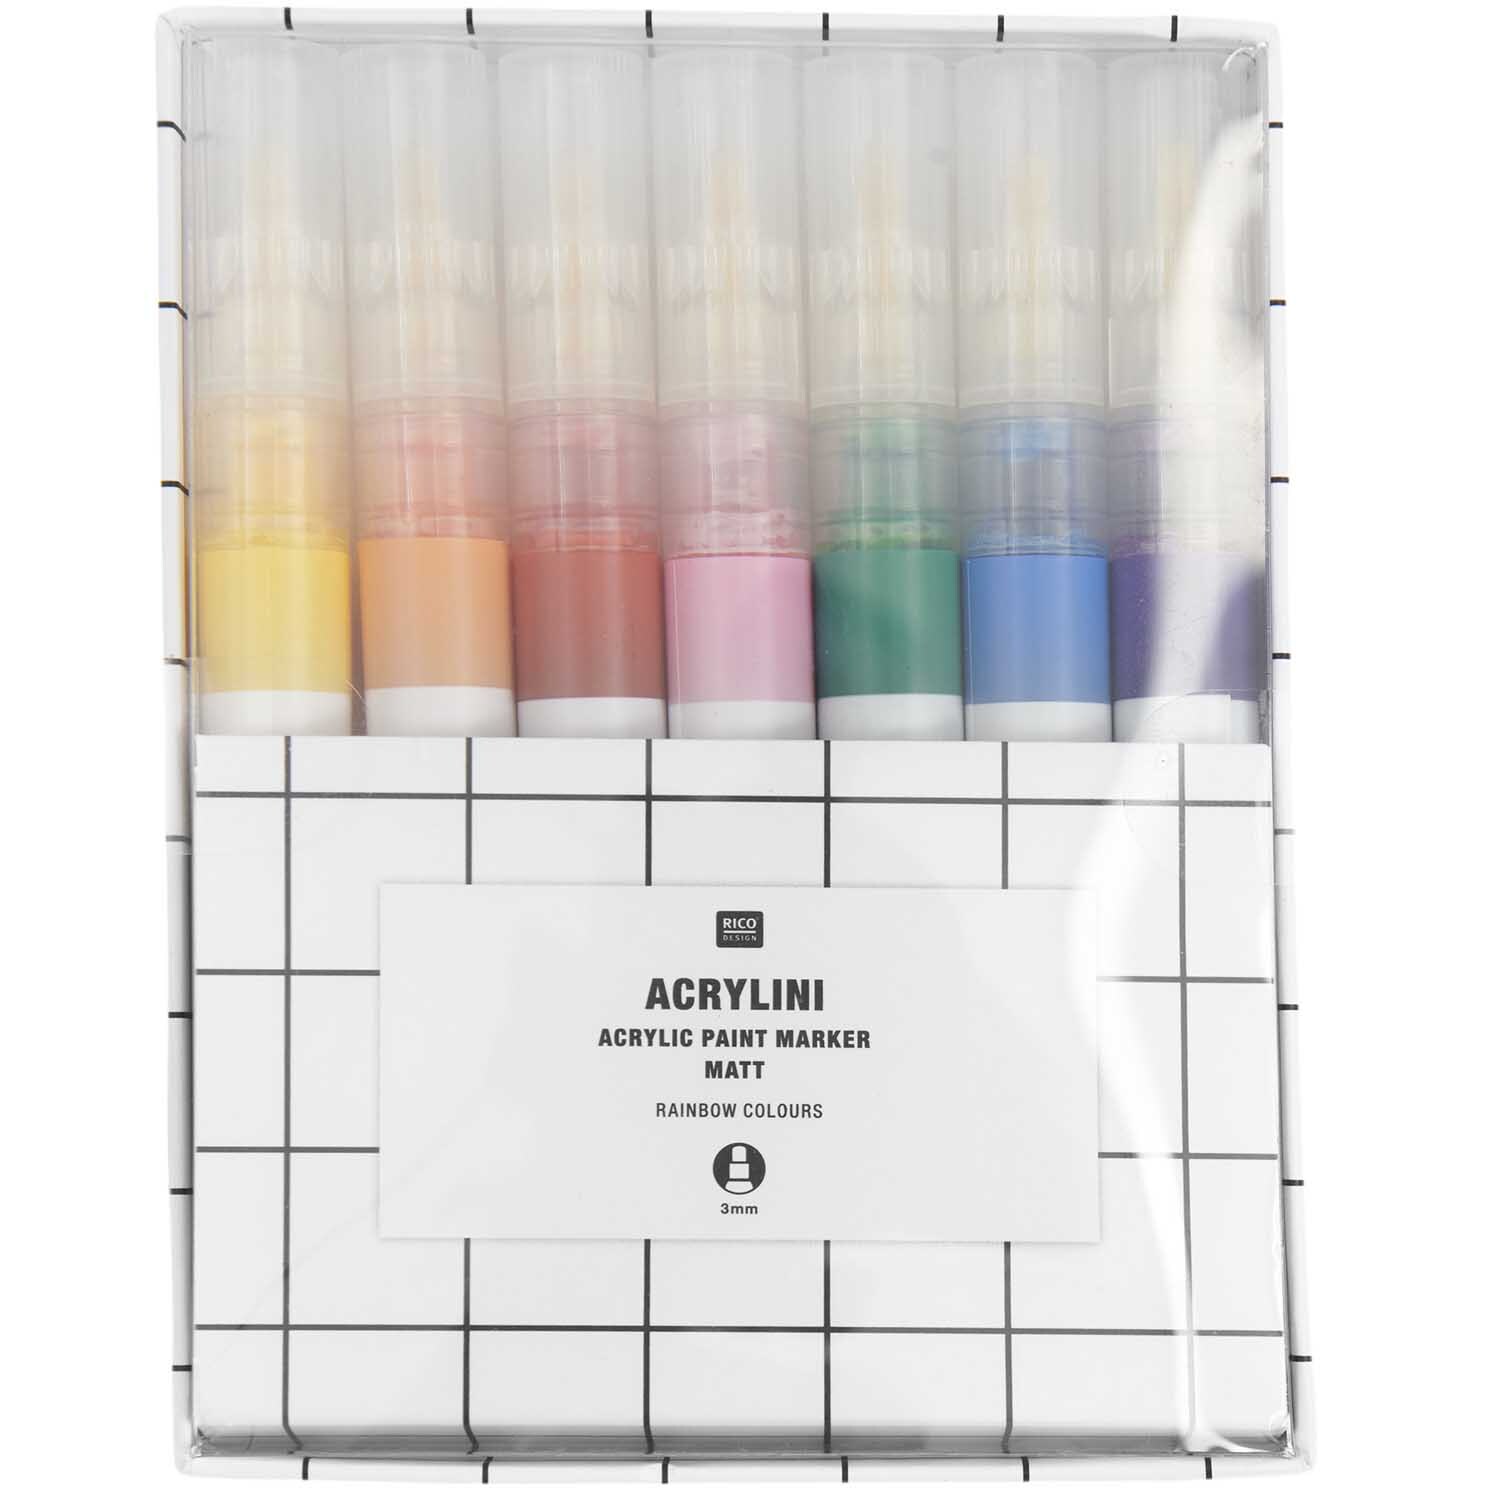 Acrylini Marker Set Rainbow Colours